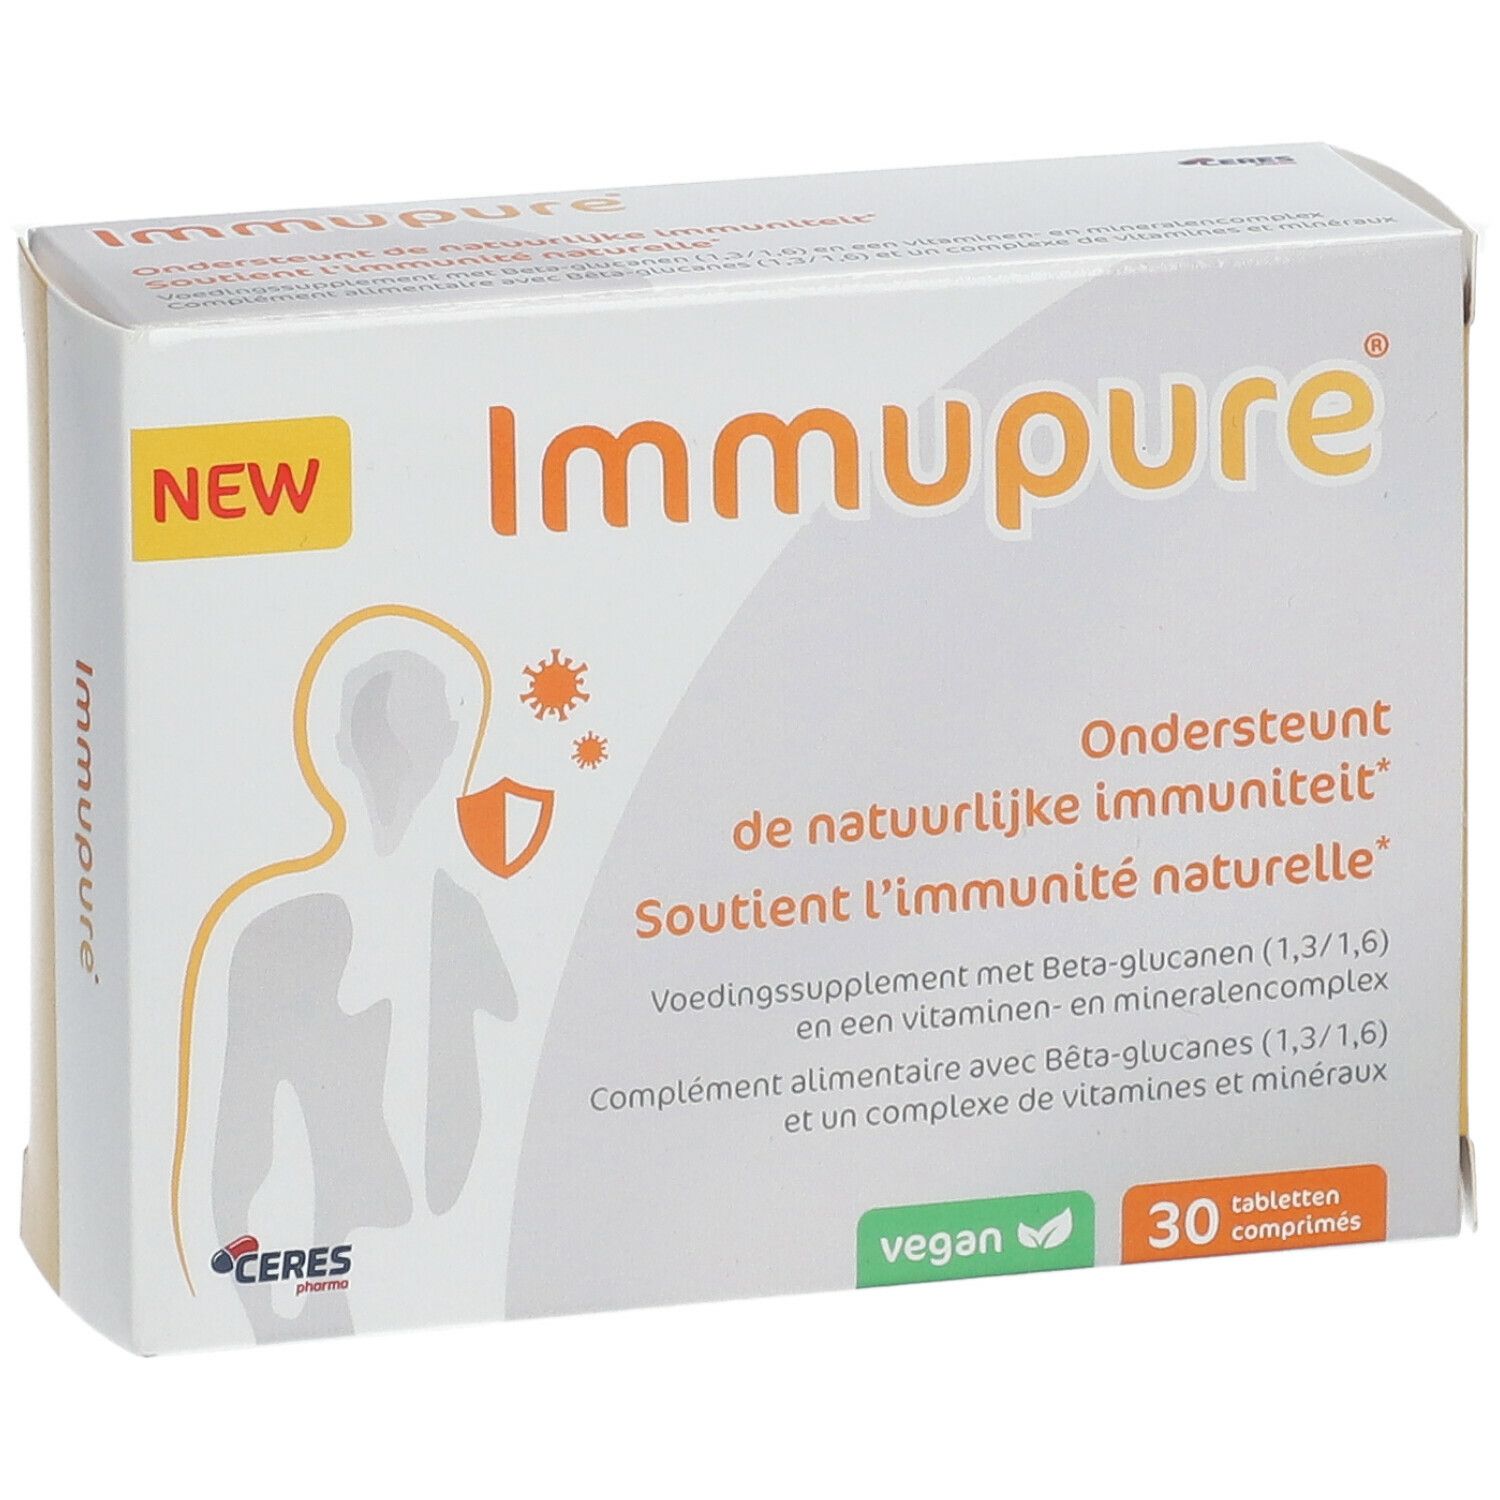 ImmuPure - Weerstand en Immuniteit